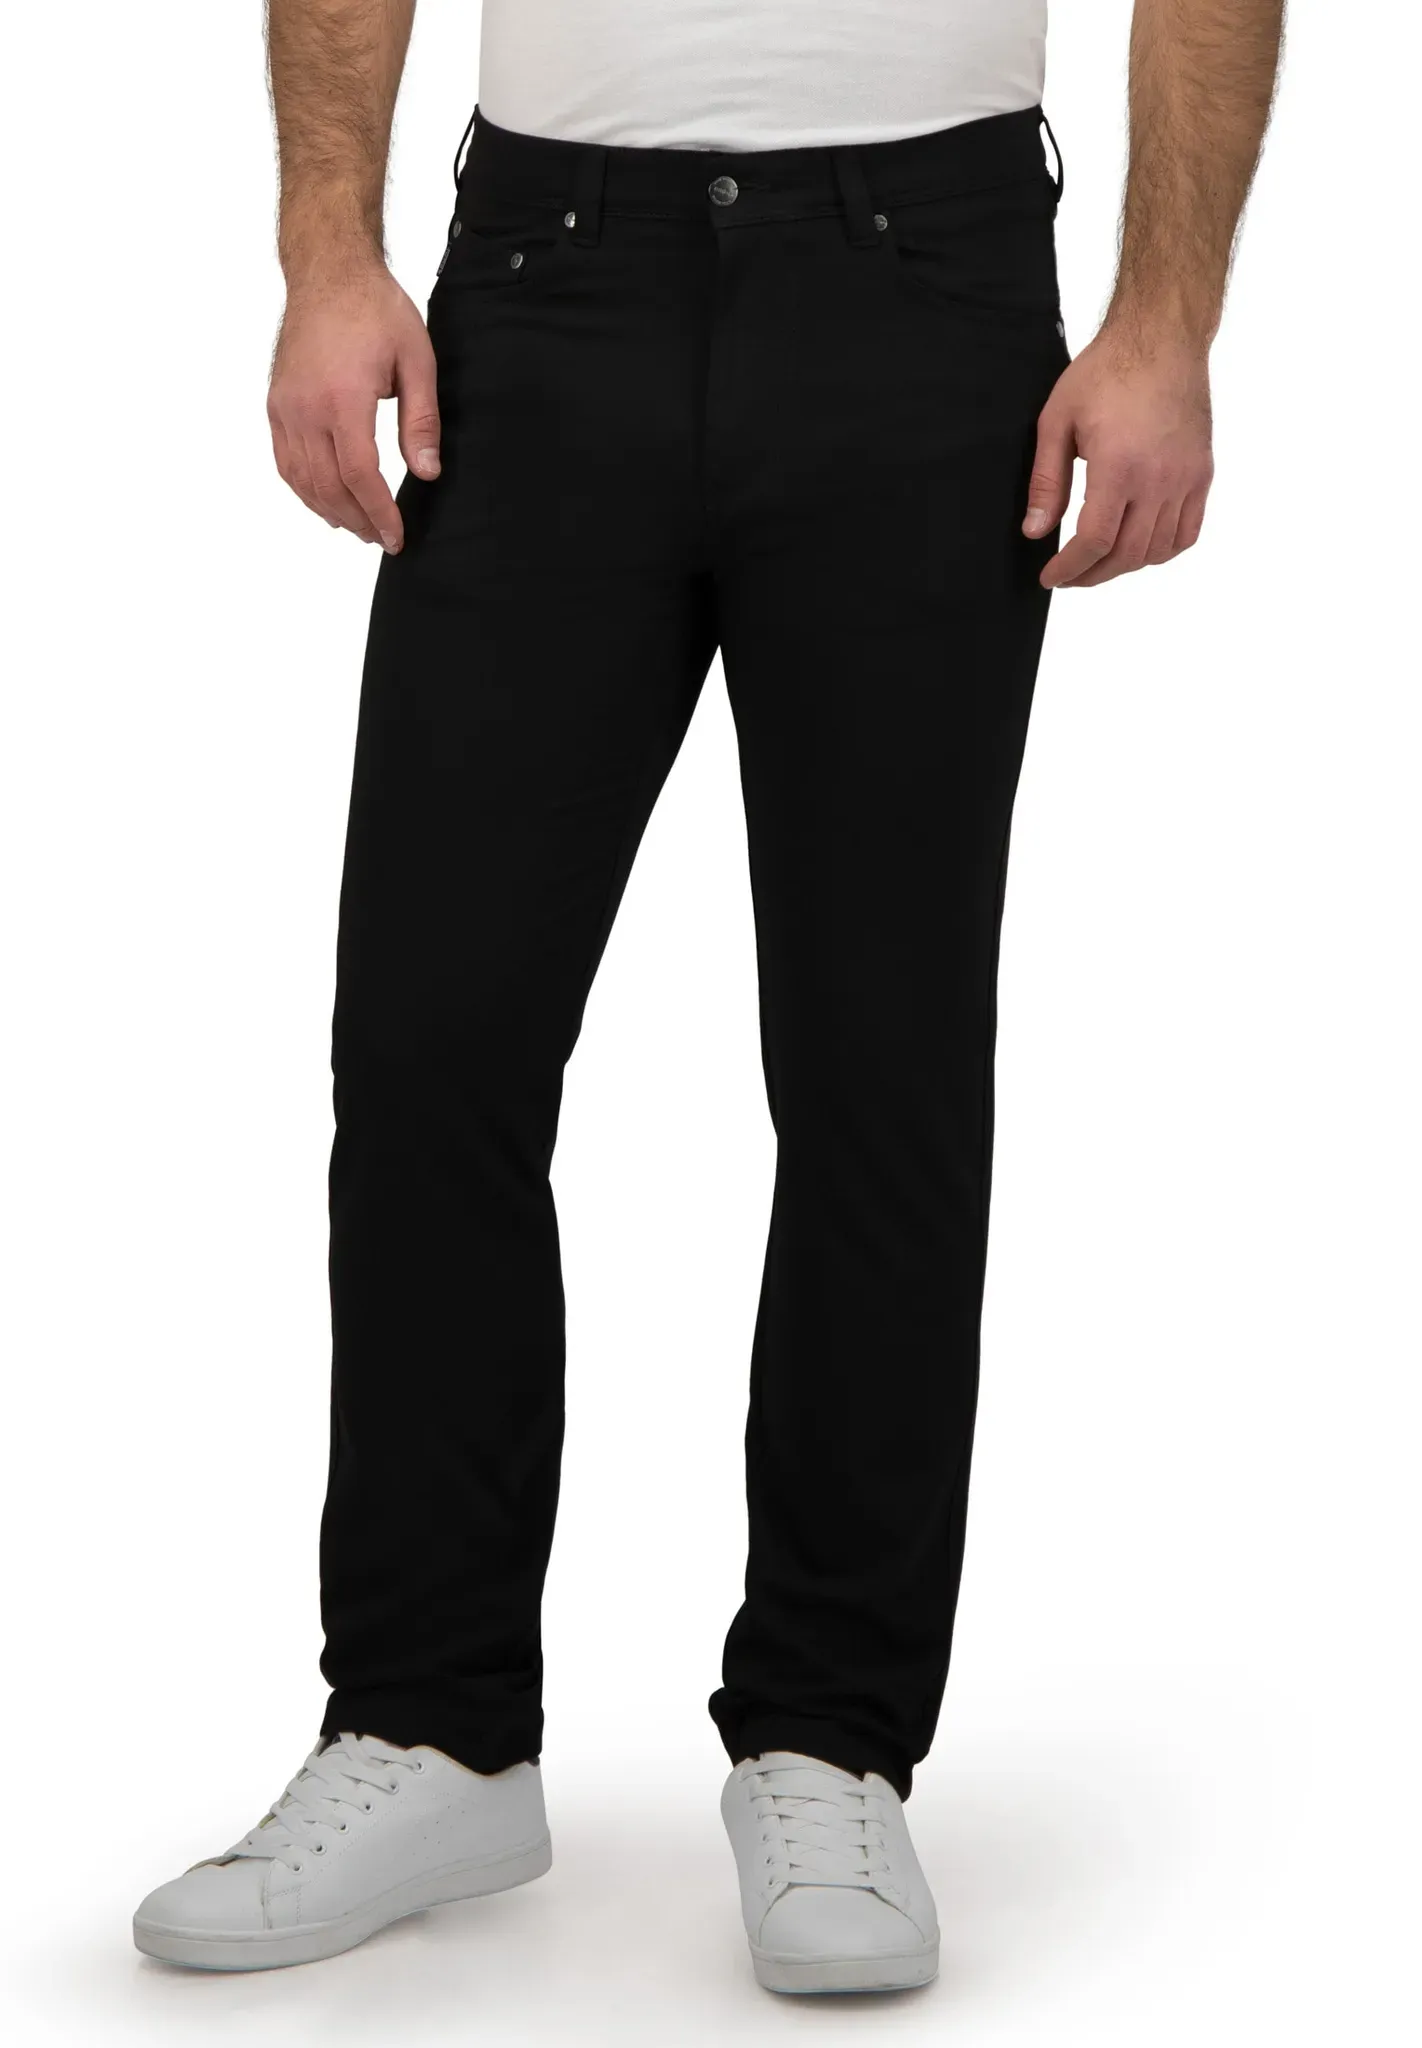 Bequeme Jeans BRÜHL "Genua III 1" Gr. 64, EURO-Größen, schwarz Herren Jeans 5-Pocket-Jeans Straight-fit-Jeans Stretchjeans Stretch